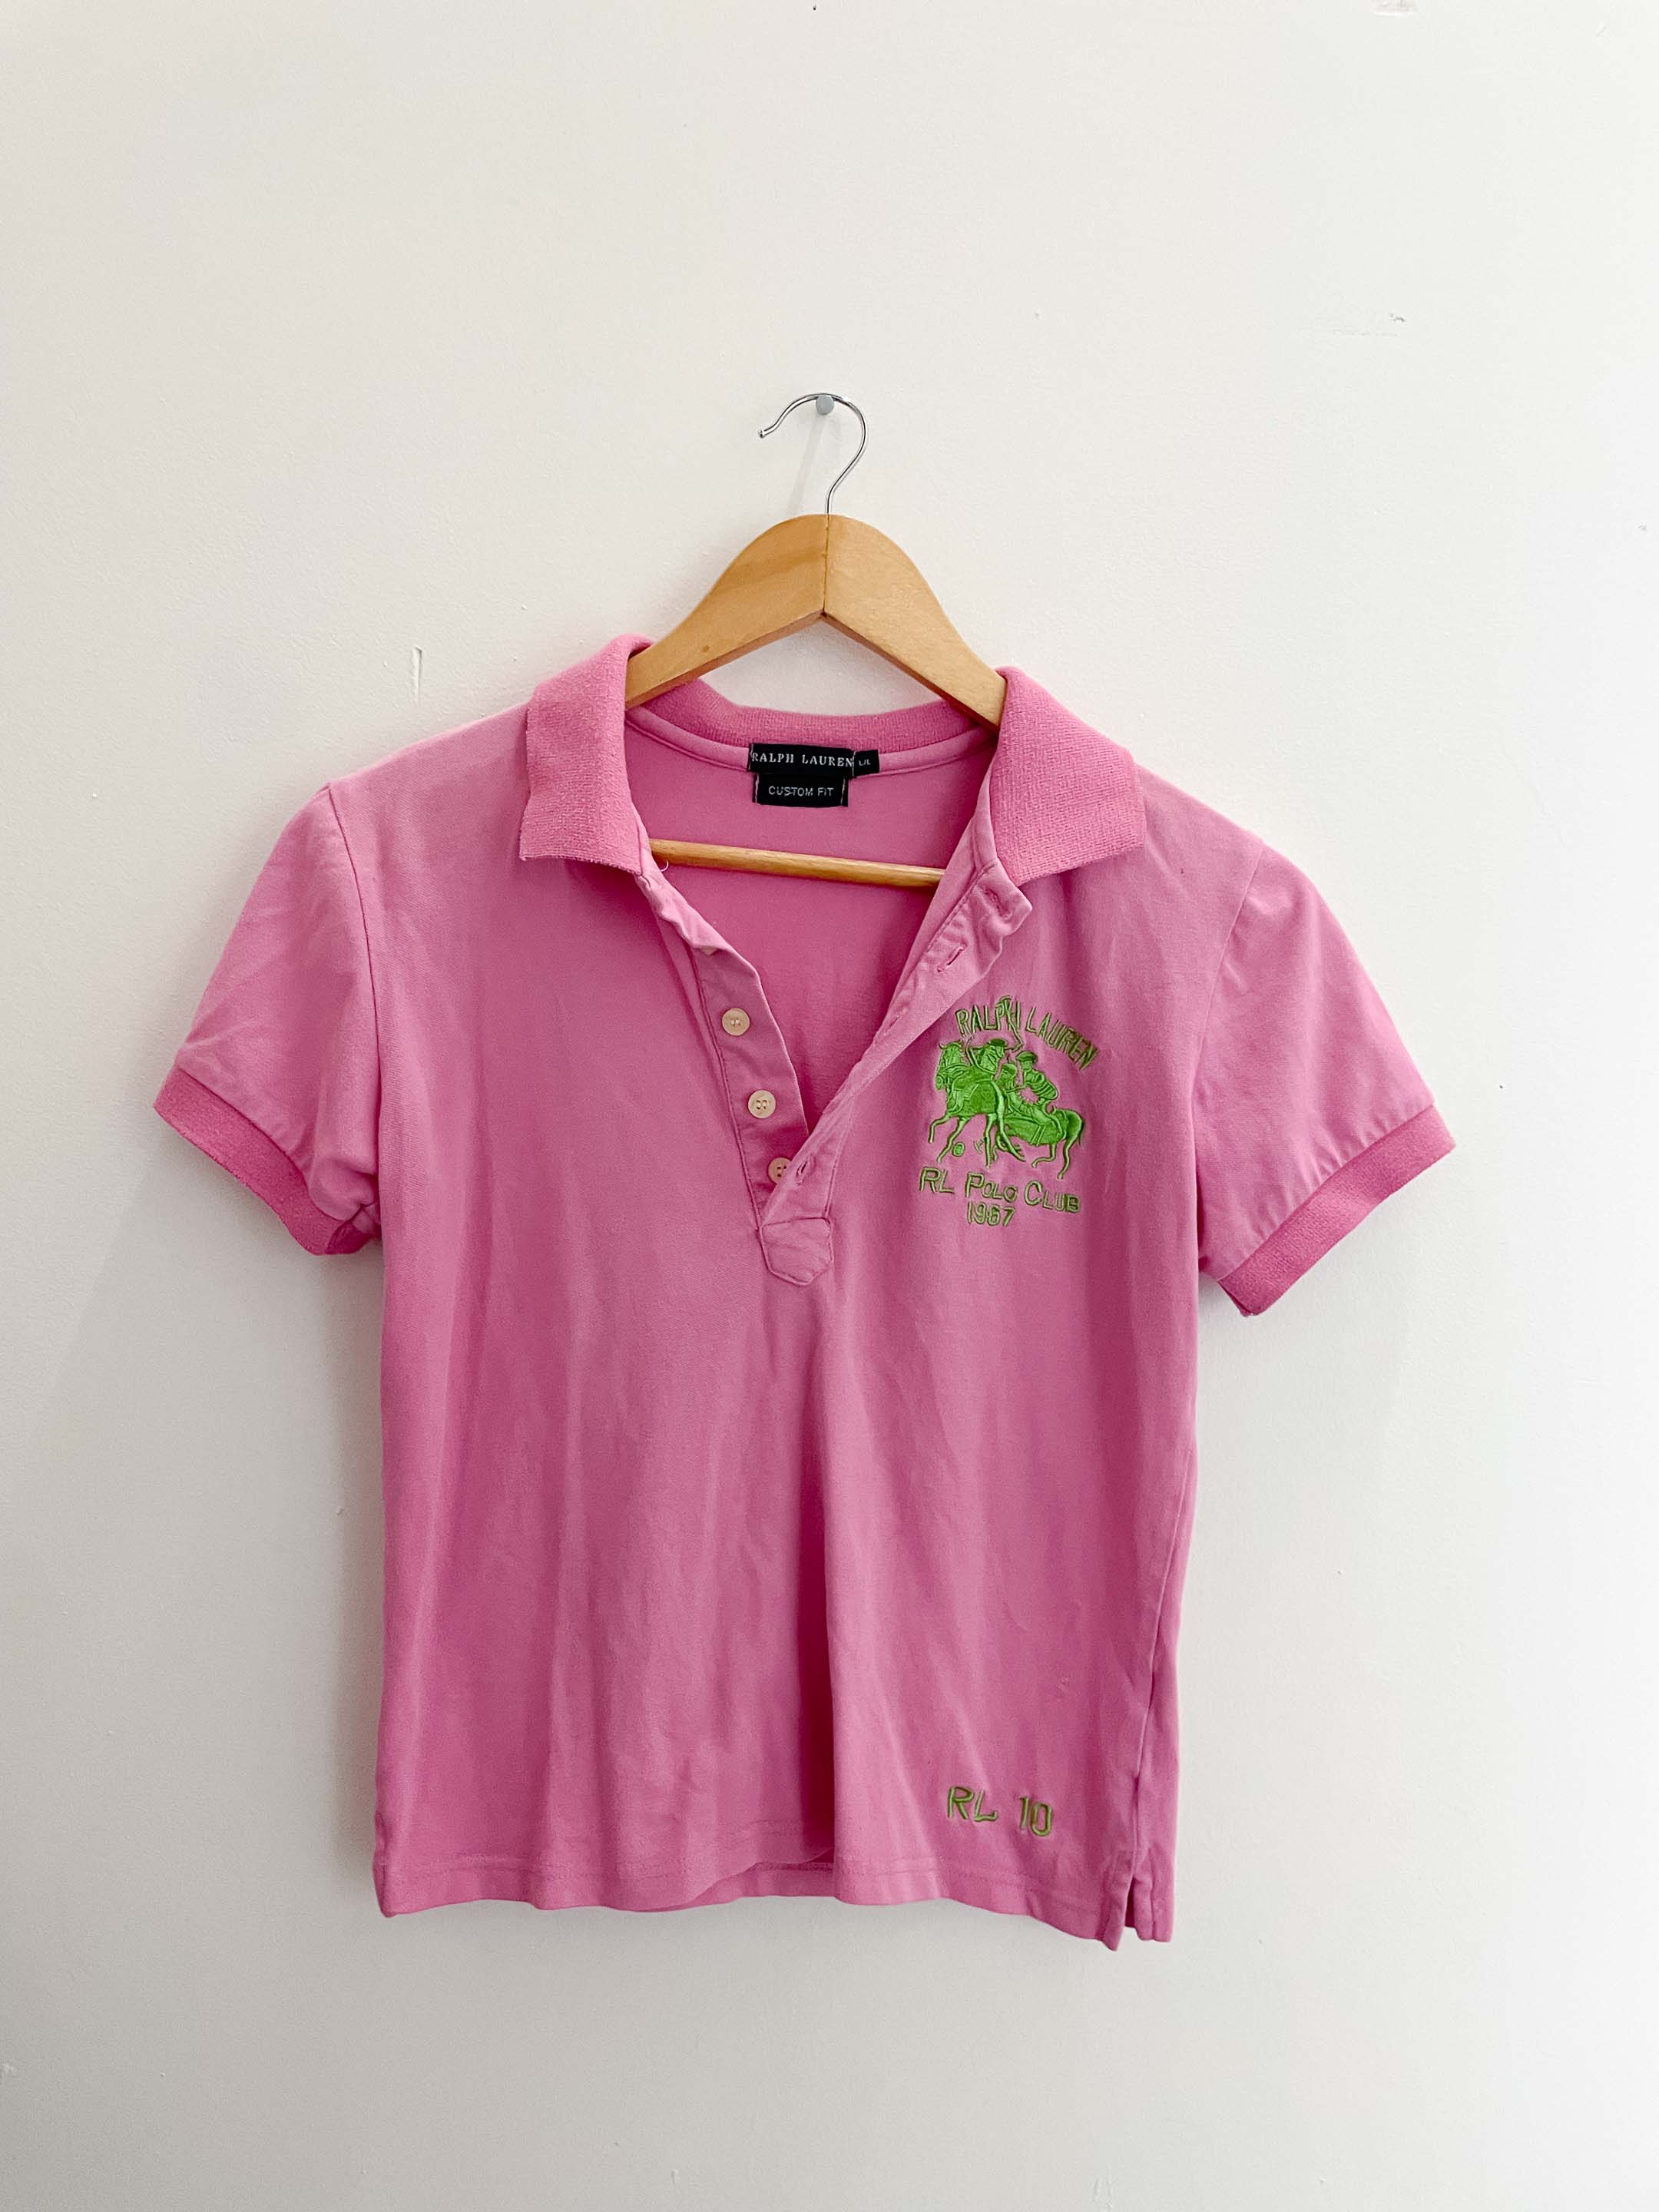 Vintage ralph lauren custom fit pink large polo shirt